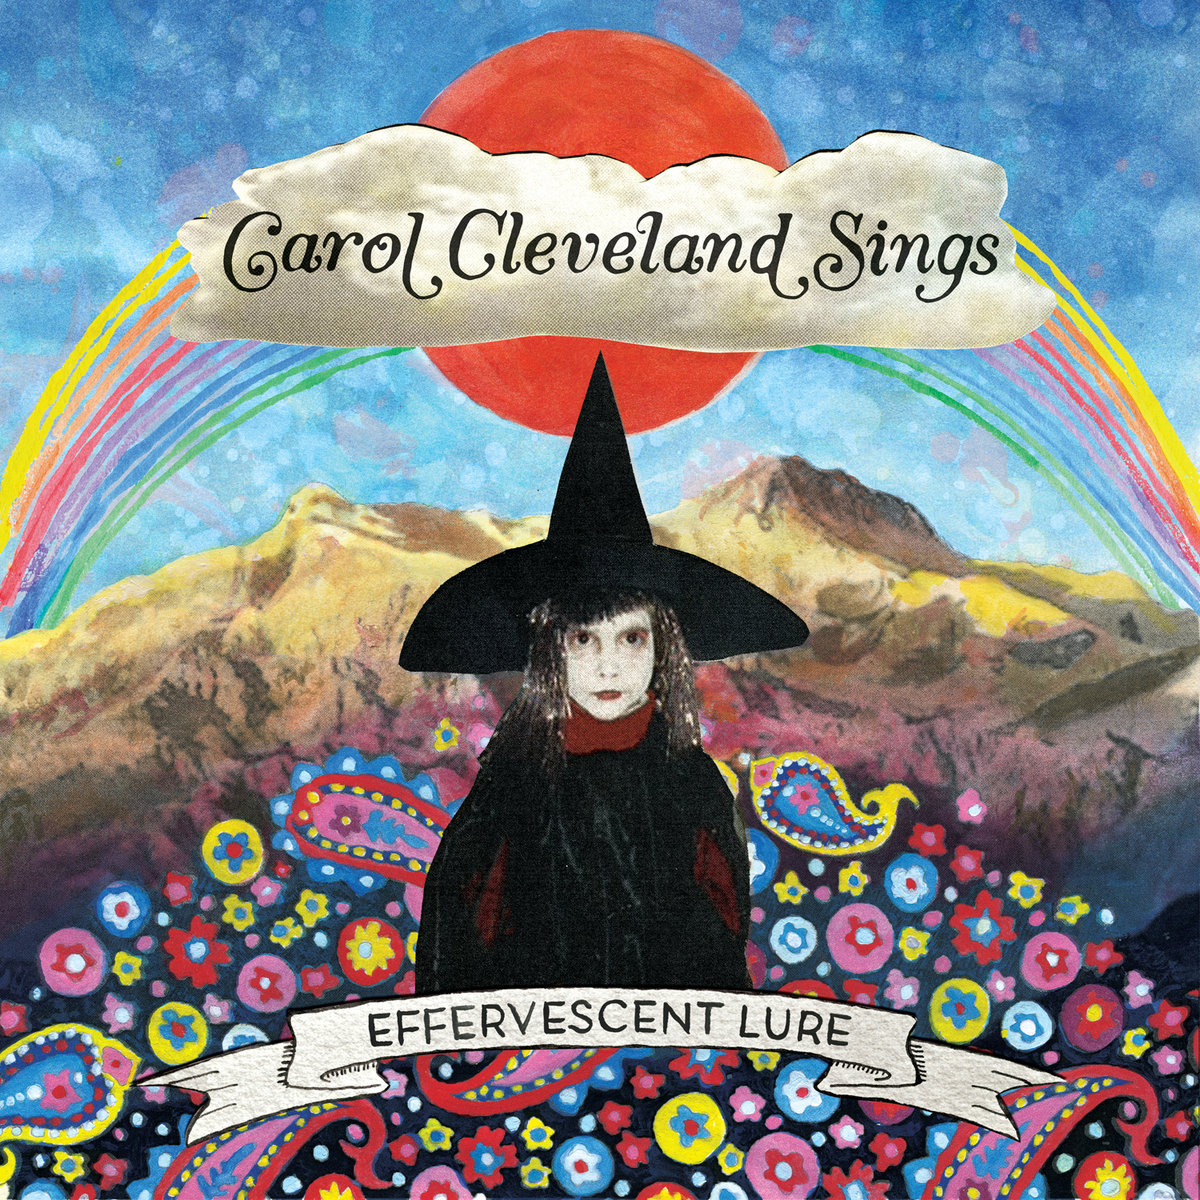 Carol Cleveland Sings